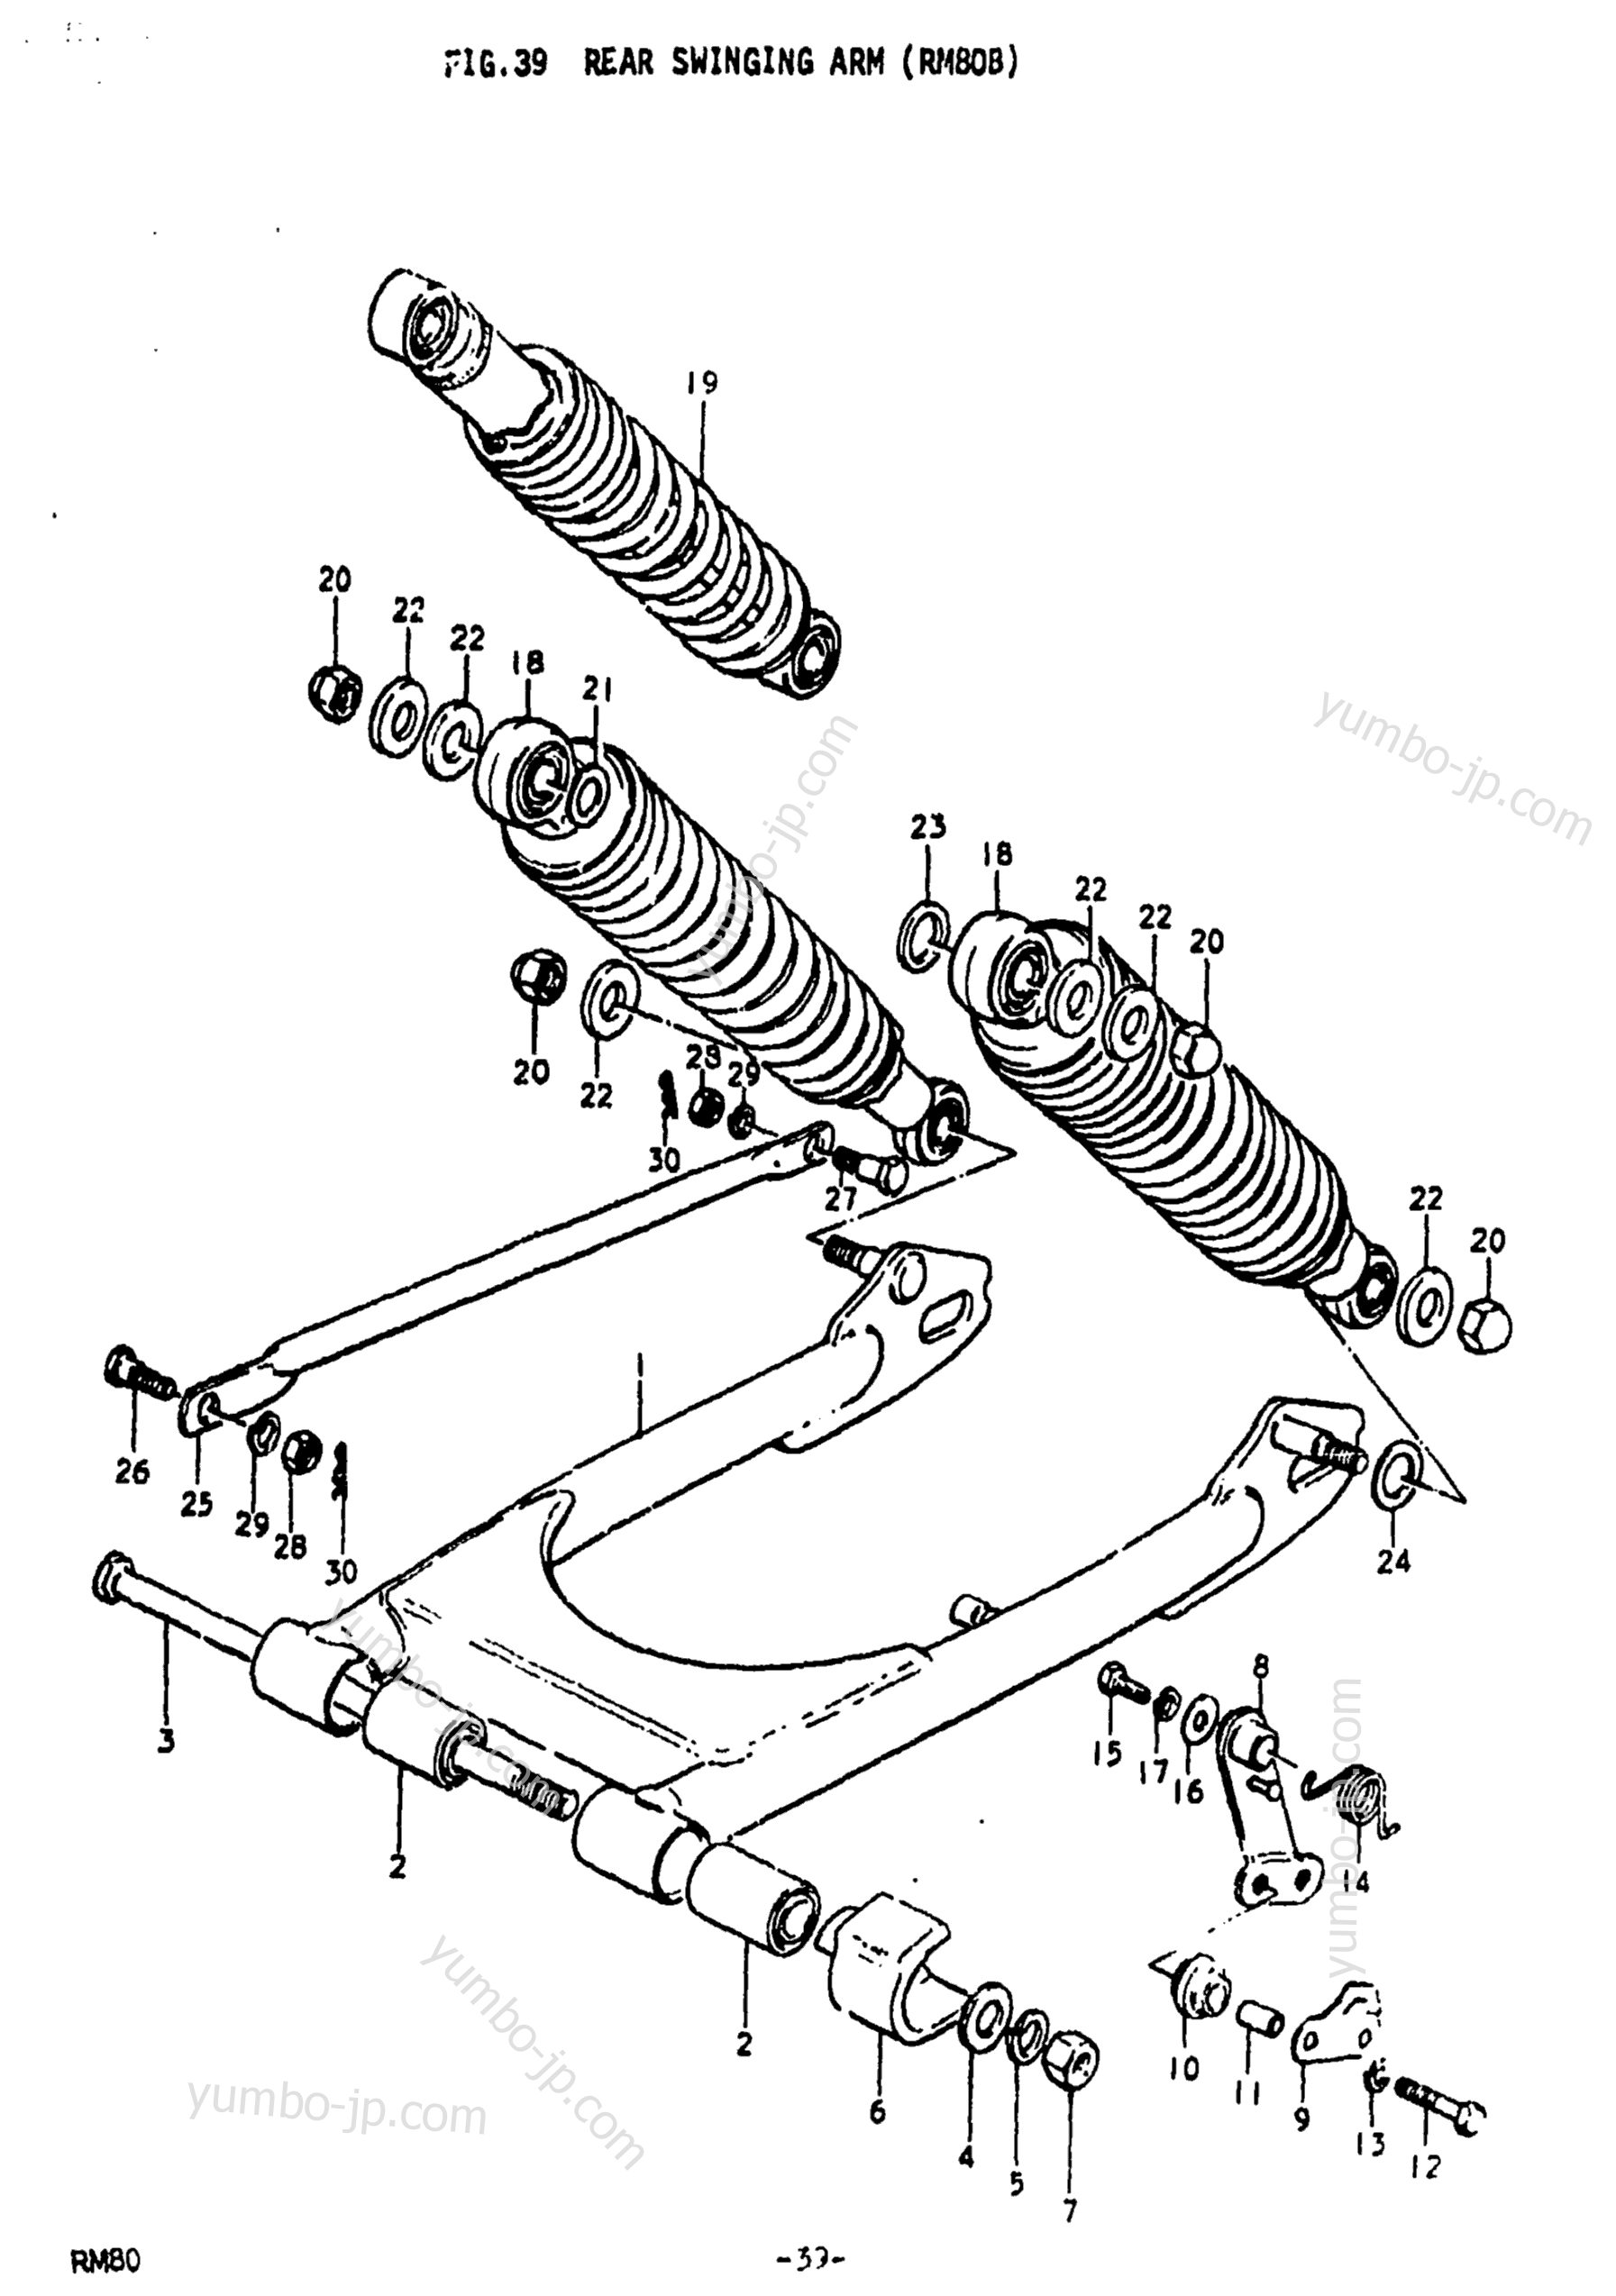 REAR SWINGING ARM (RM80B) for motorcycles SUZUKI RM80 1977 year